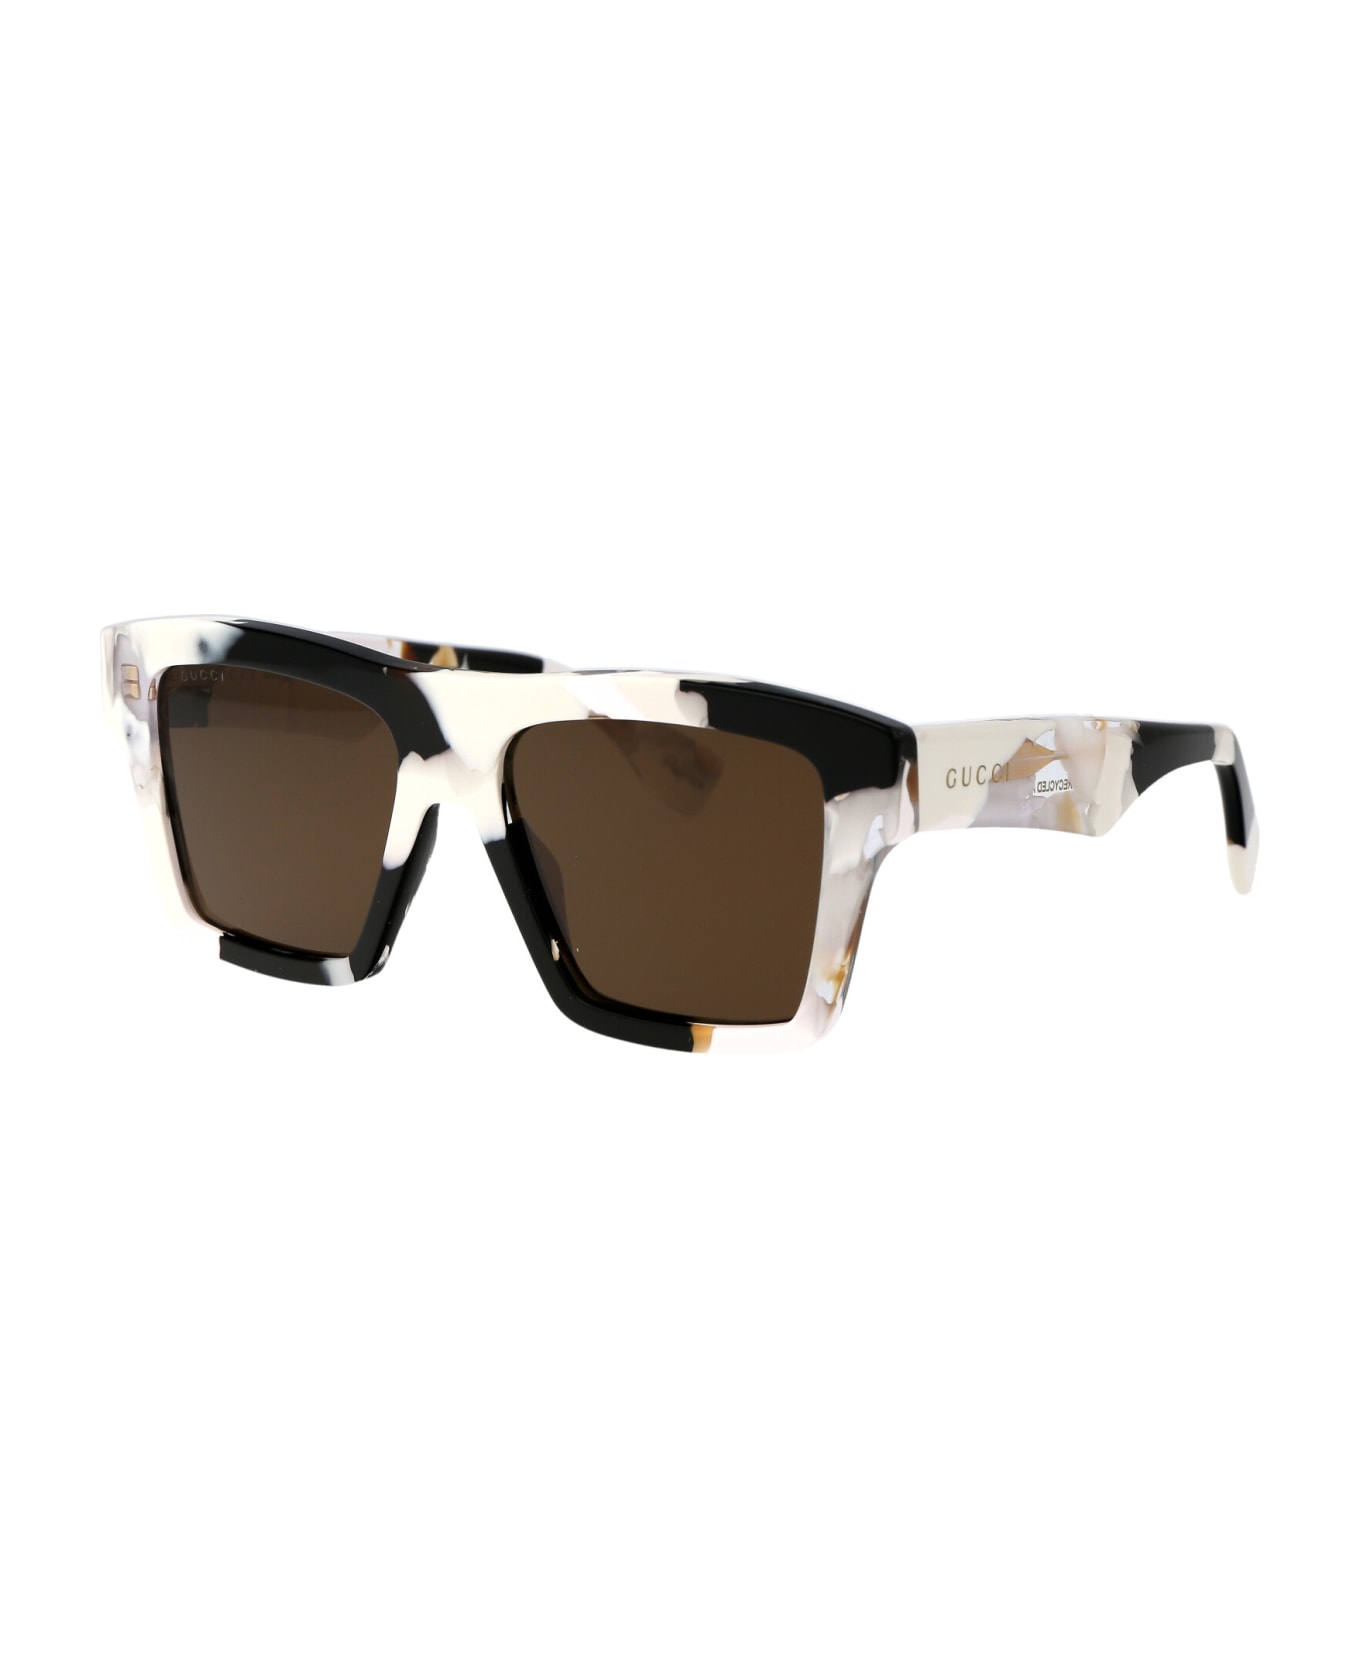 Gucci Eyewear Gg1623s Sunglasses - 002 WHITE WHITE BROWN